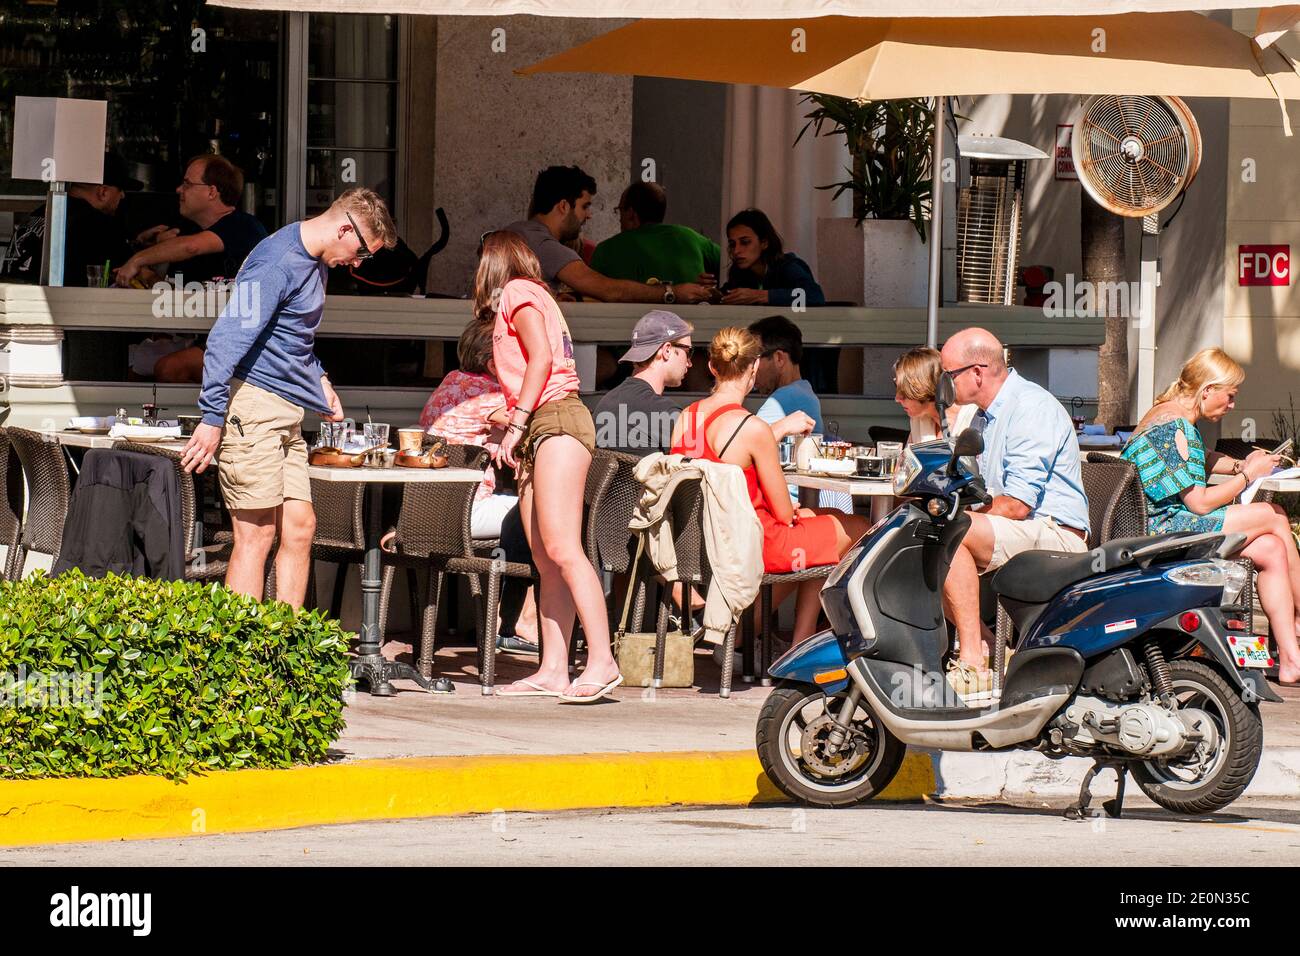 Street scenes along Ocean Drive, South Beach district, Miami, Florida. Stock Photo